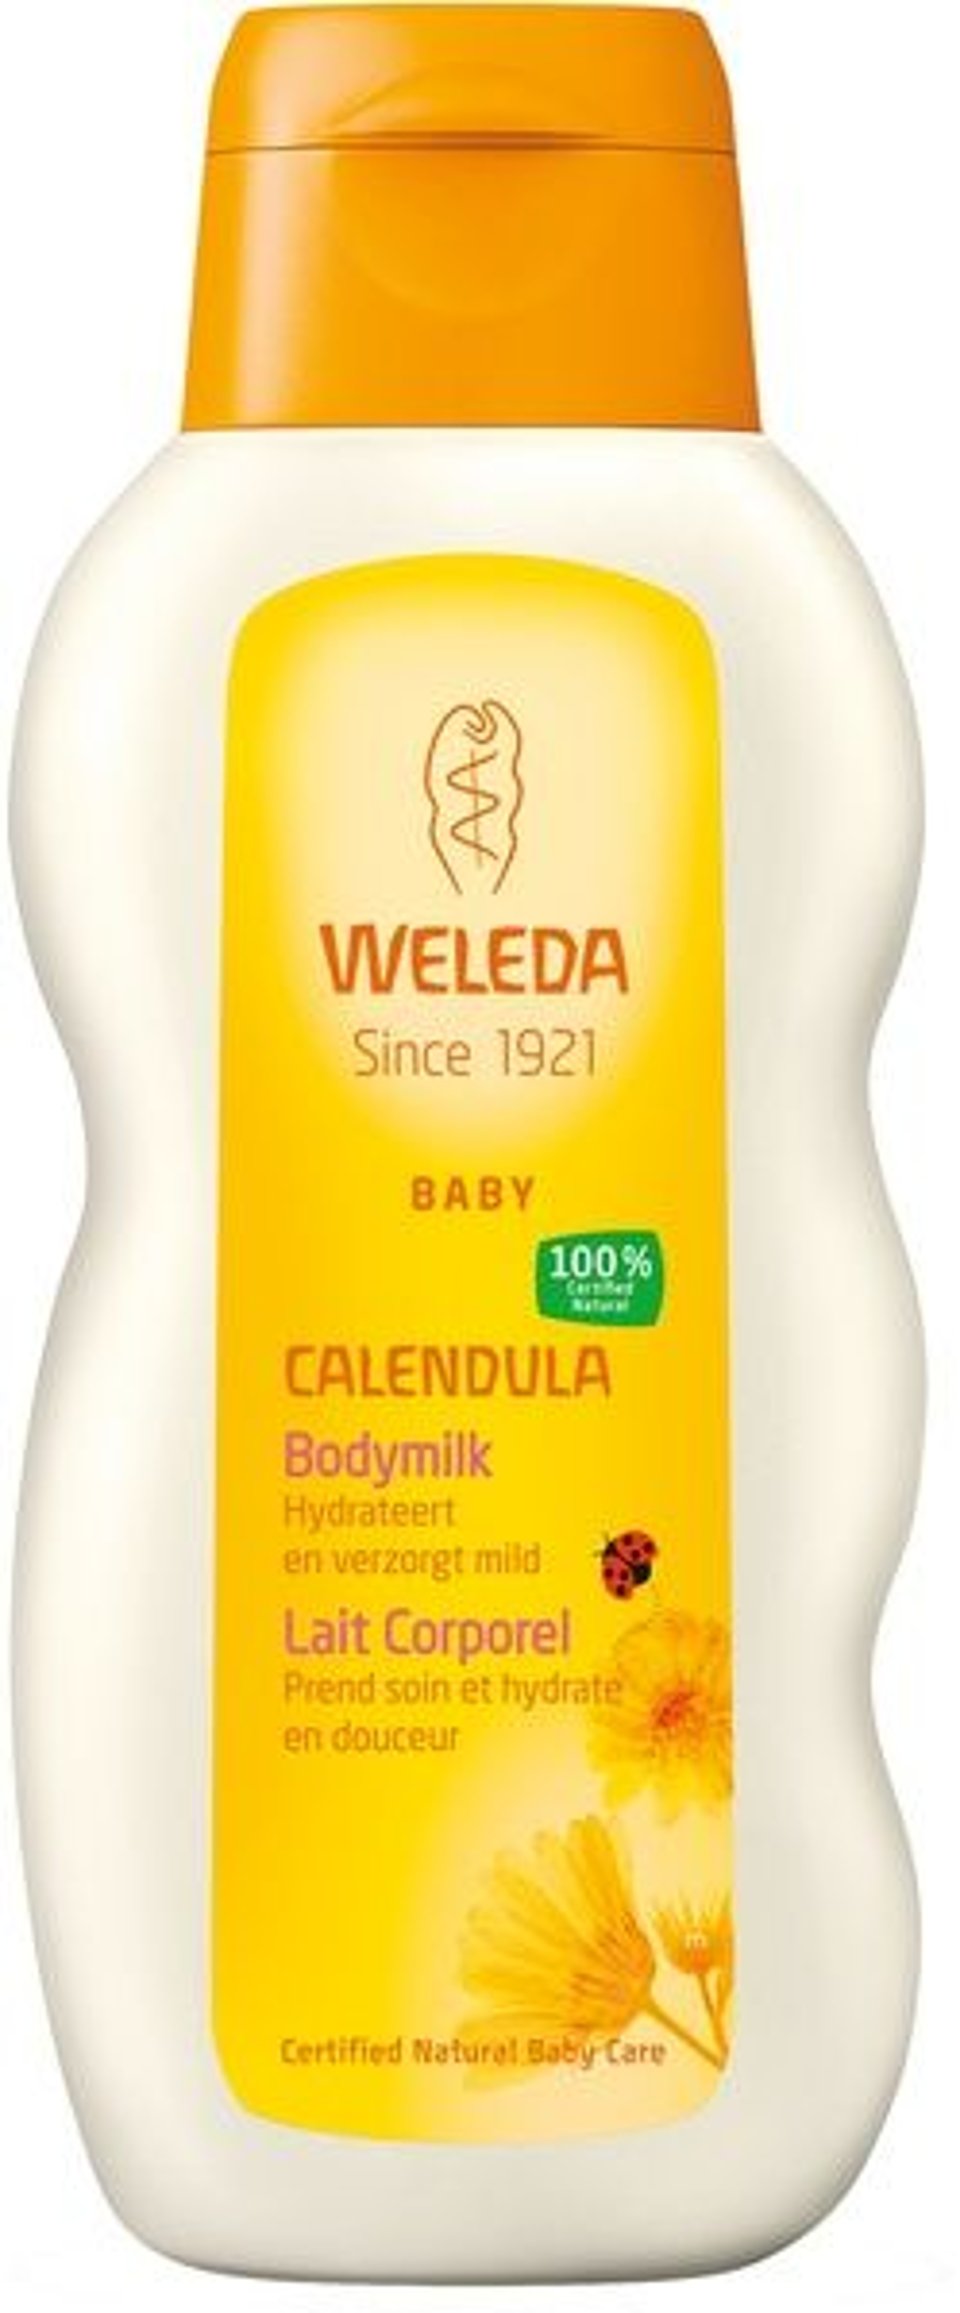 Baby Bodymilk Calendula